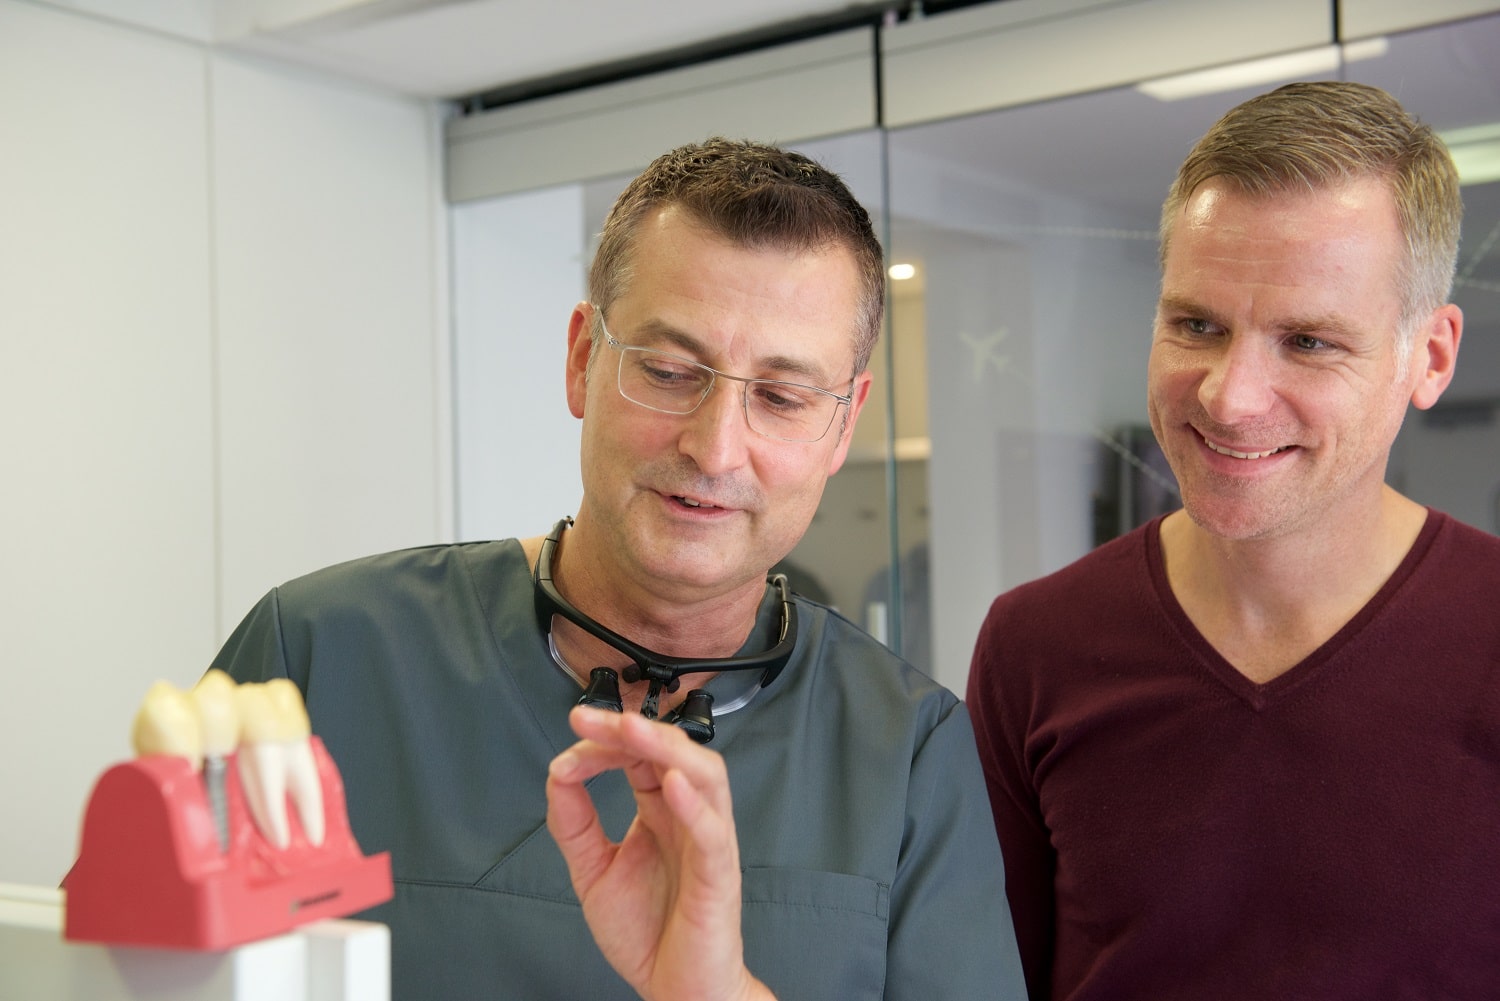 Implantologische Beratung durch Implantologe Rüdiger Mintert